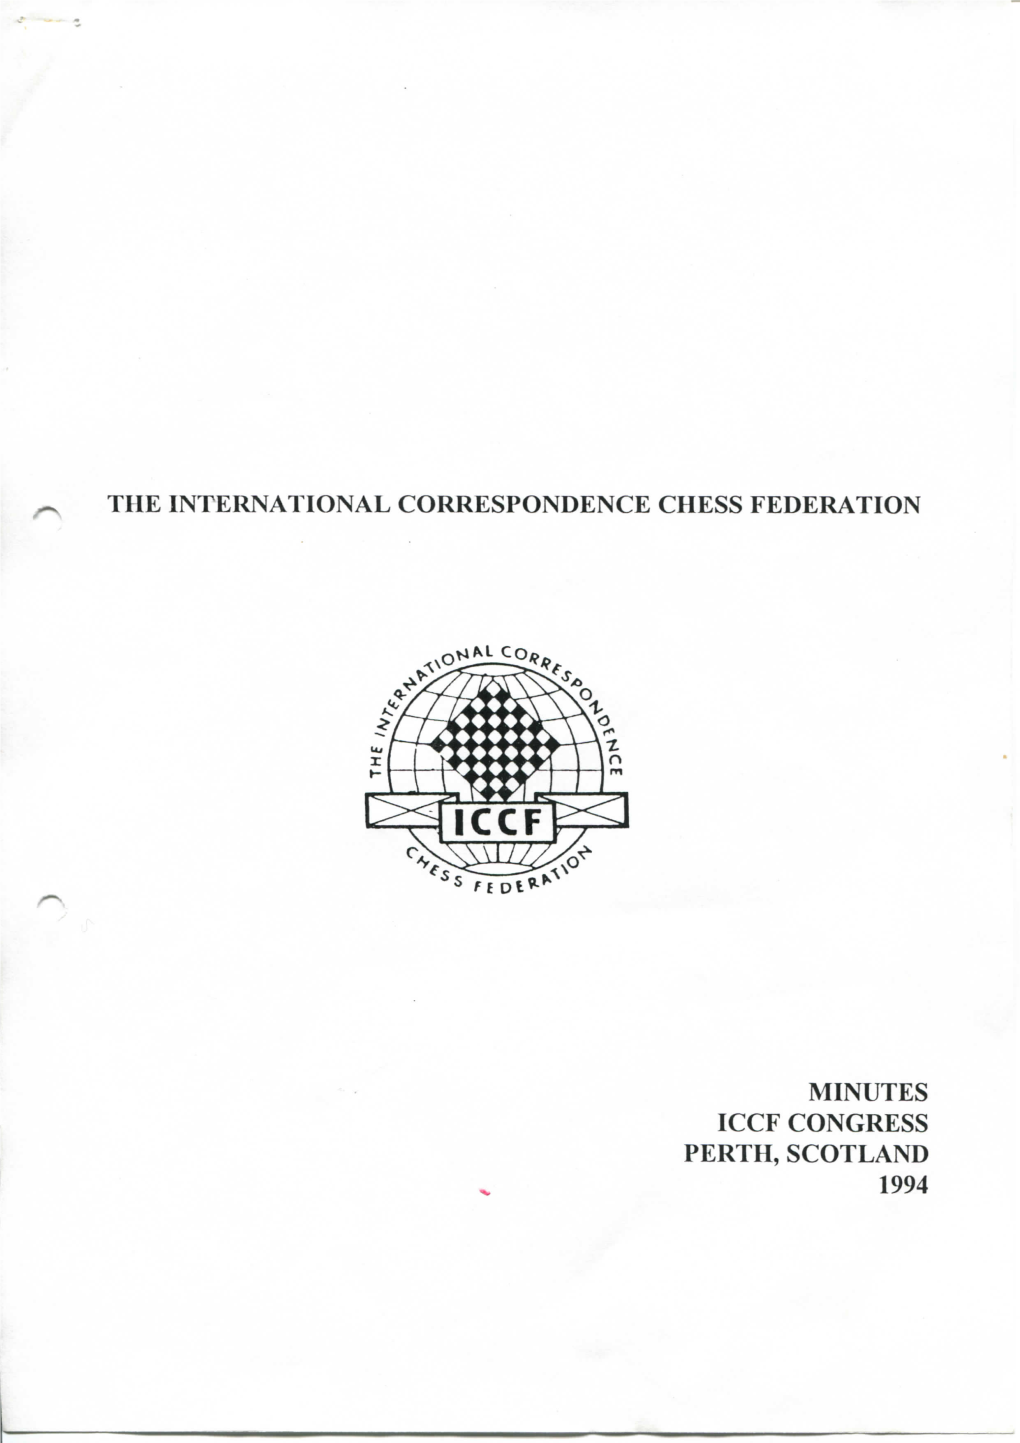 The International Correspondence Chess Federation